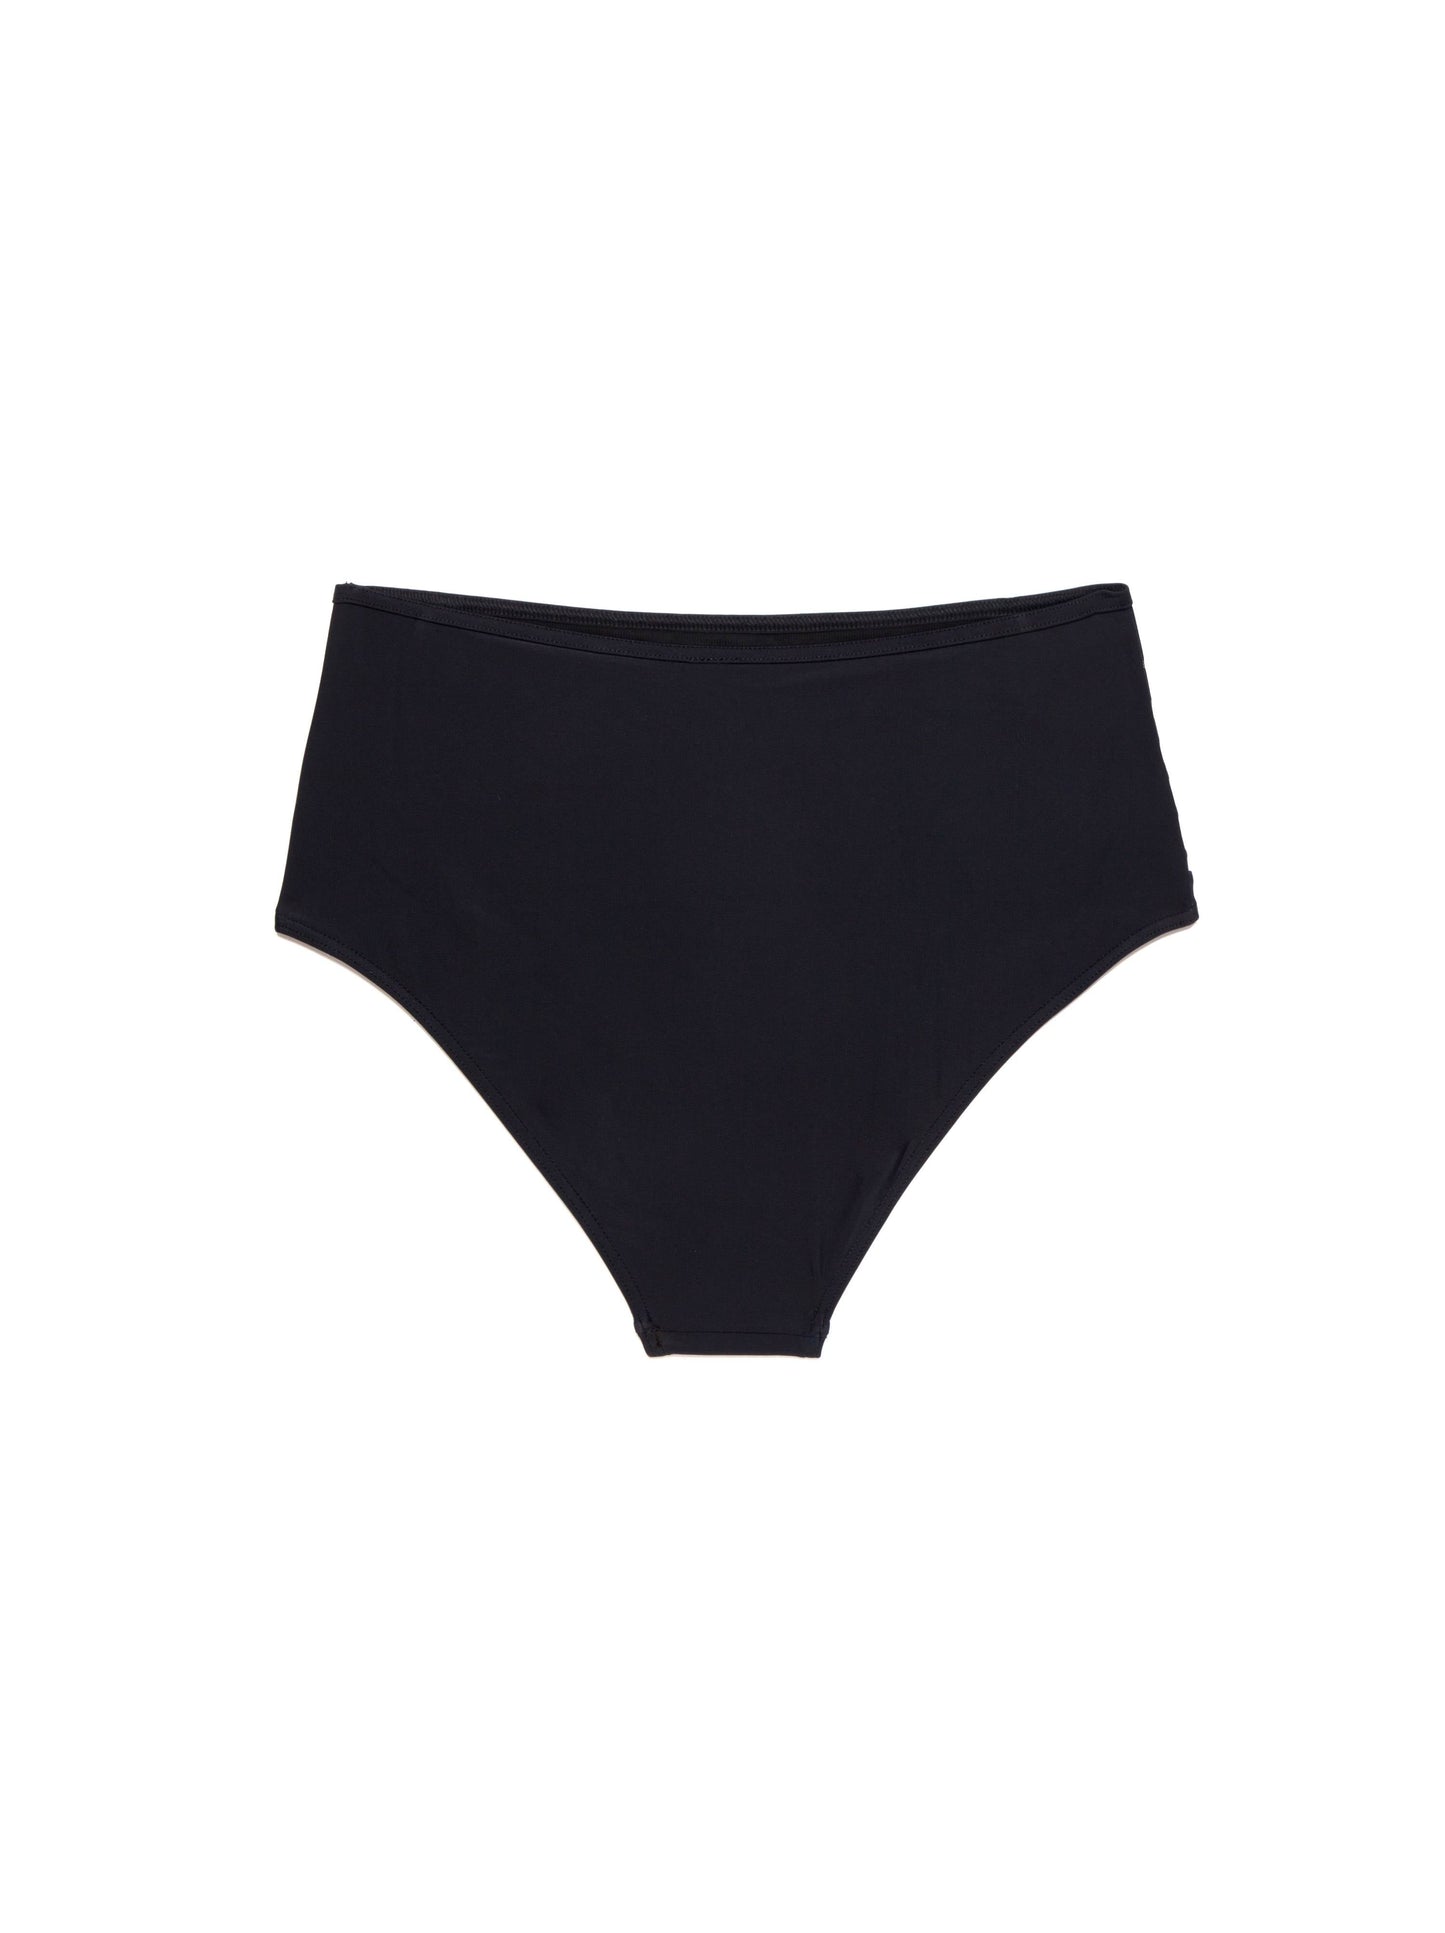 Conte/Esli Women's Swimming Black Bikini/Panty/Bottom - Tropea #0417